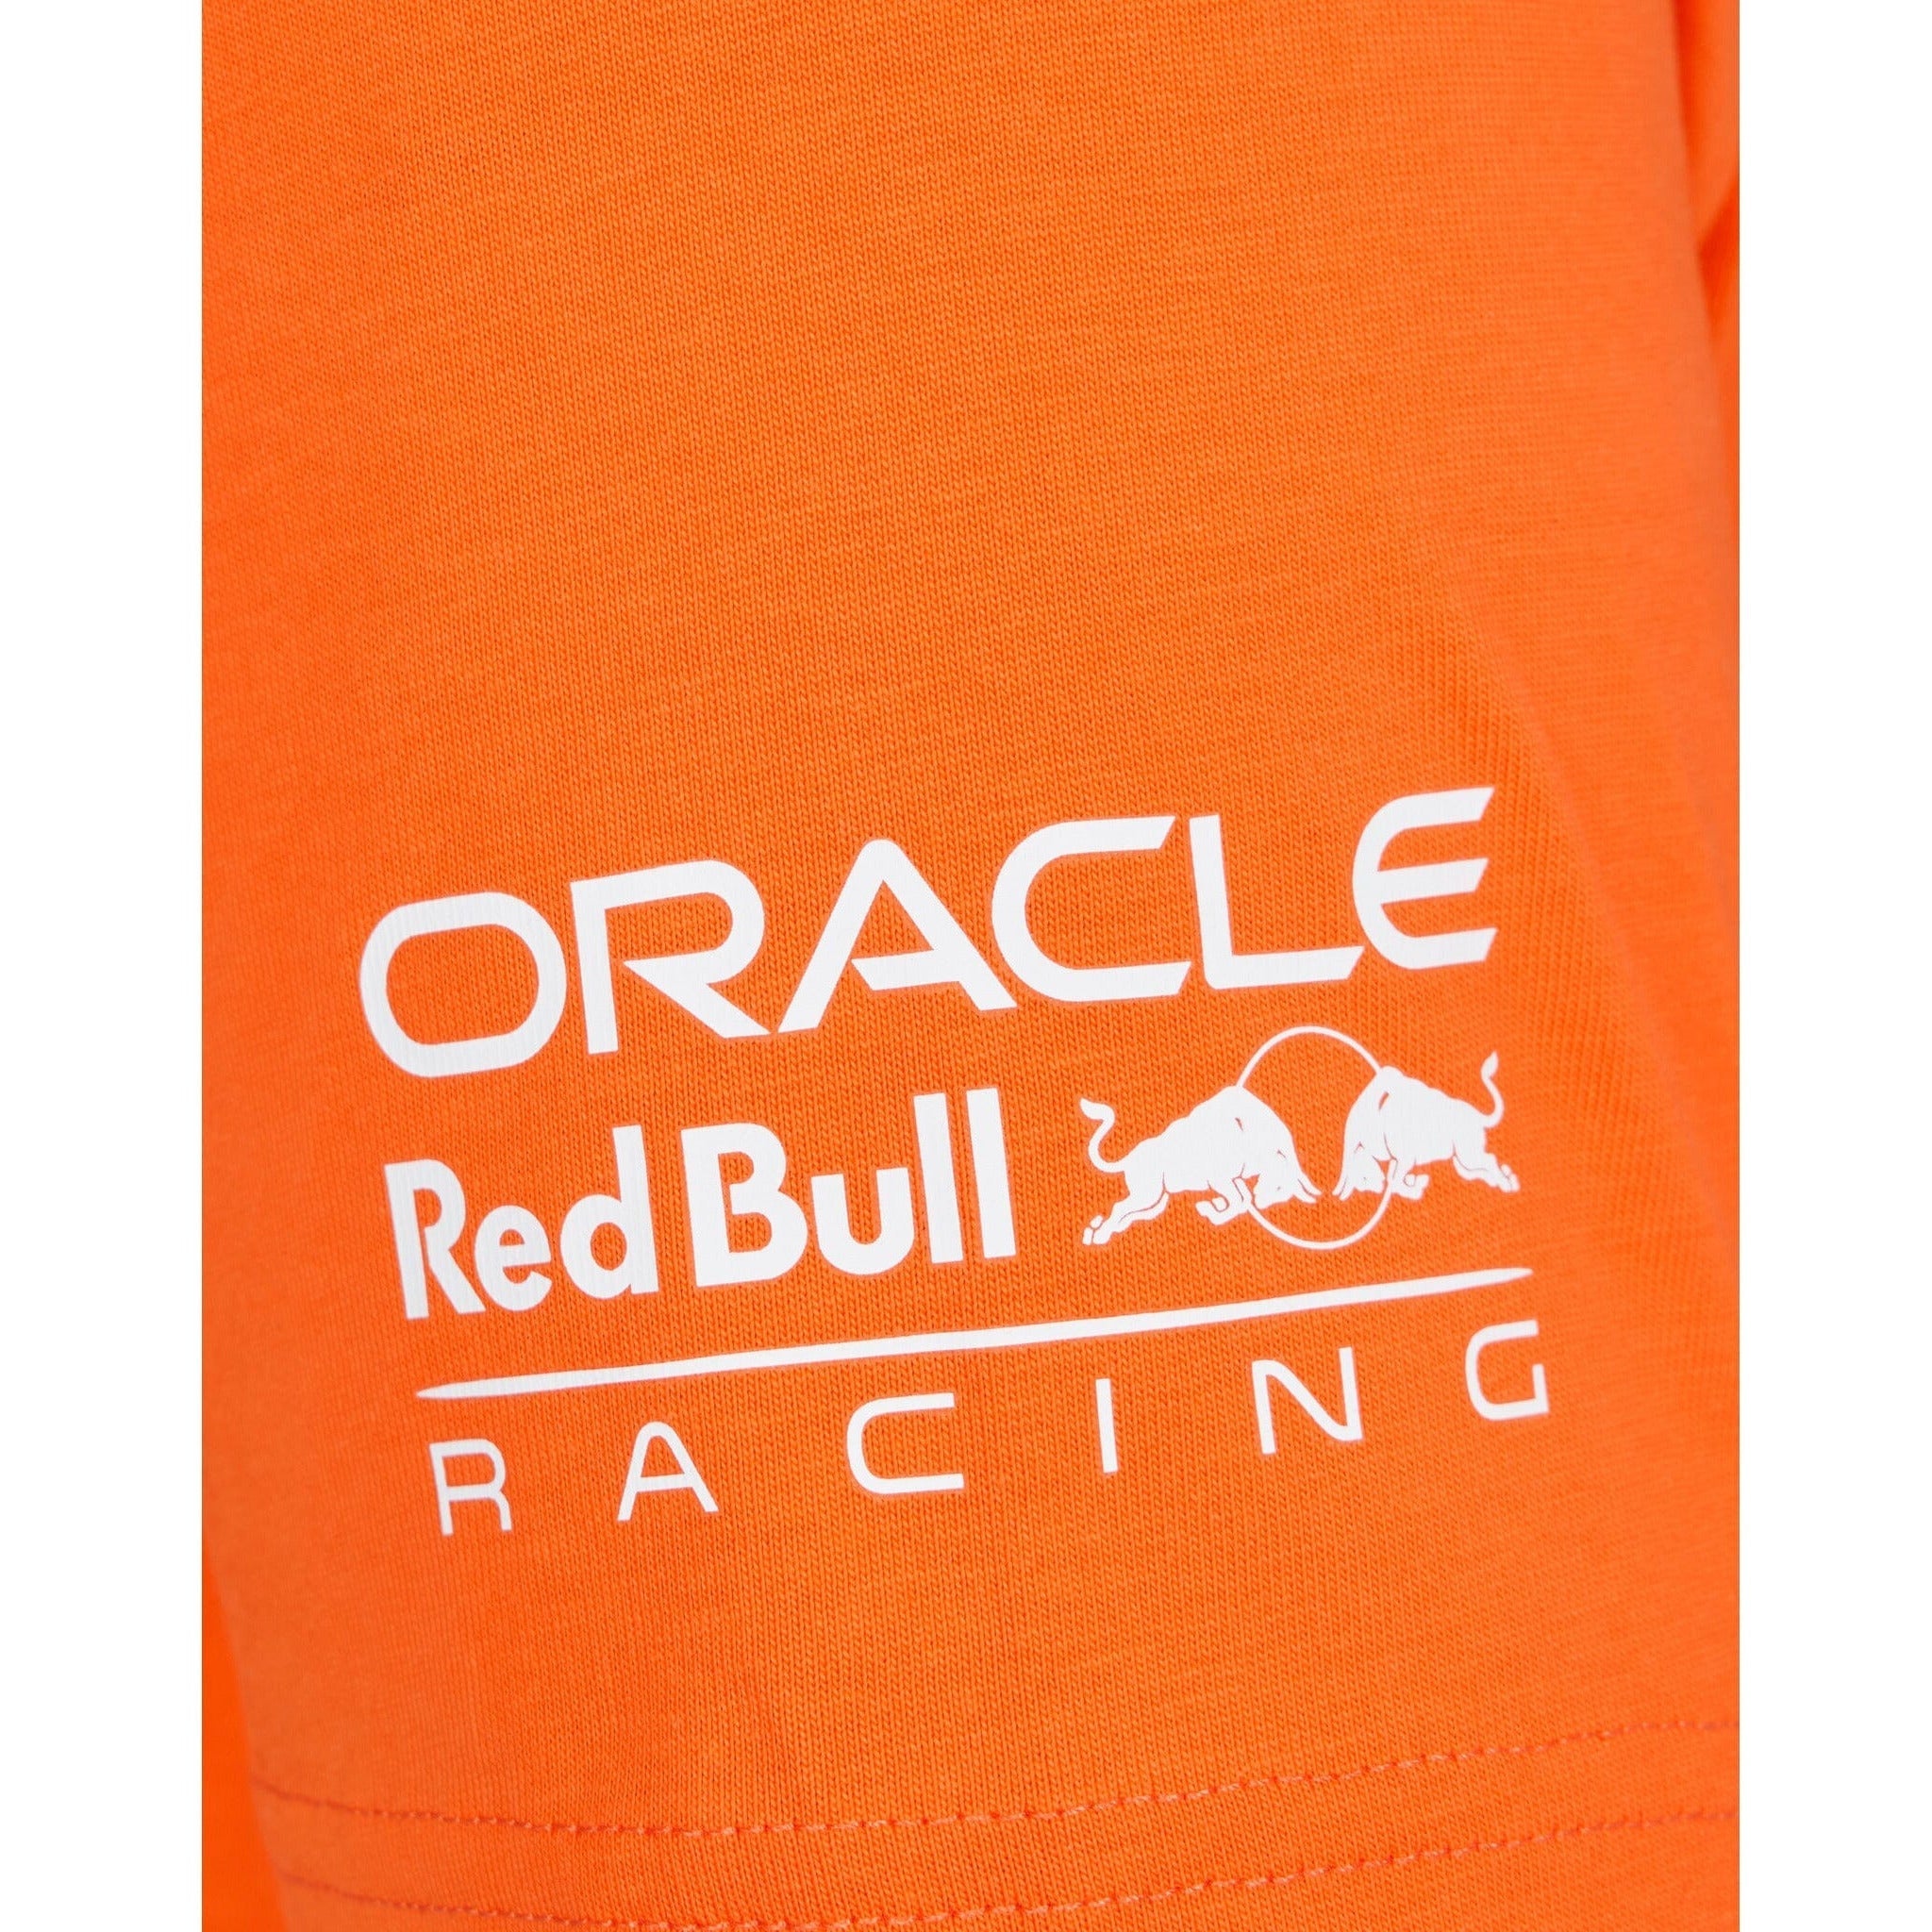 Red Bull Racing F1 Max Verstappen Driver T-Shirt - Exotic Orange